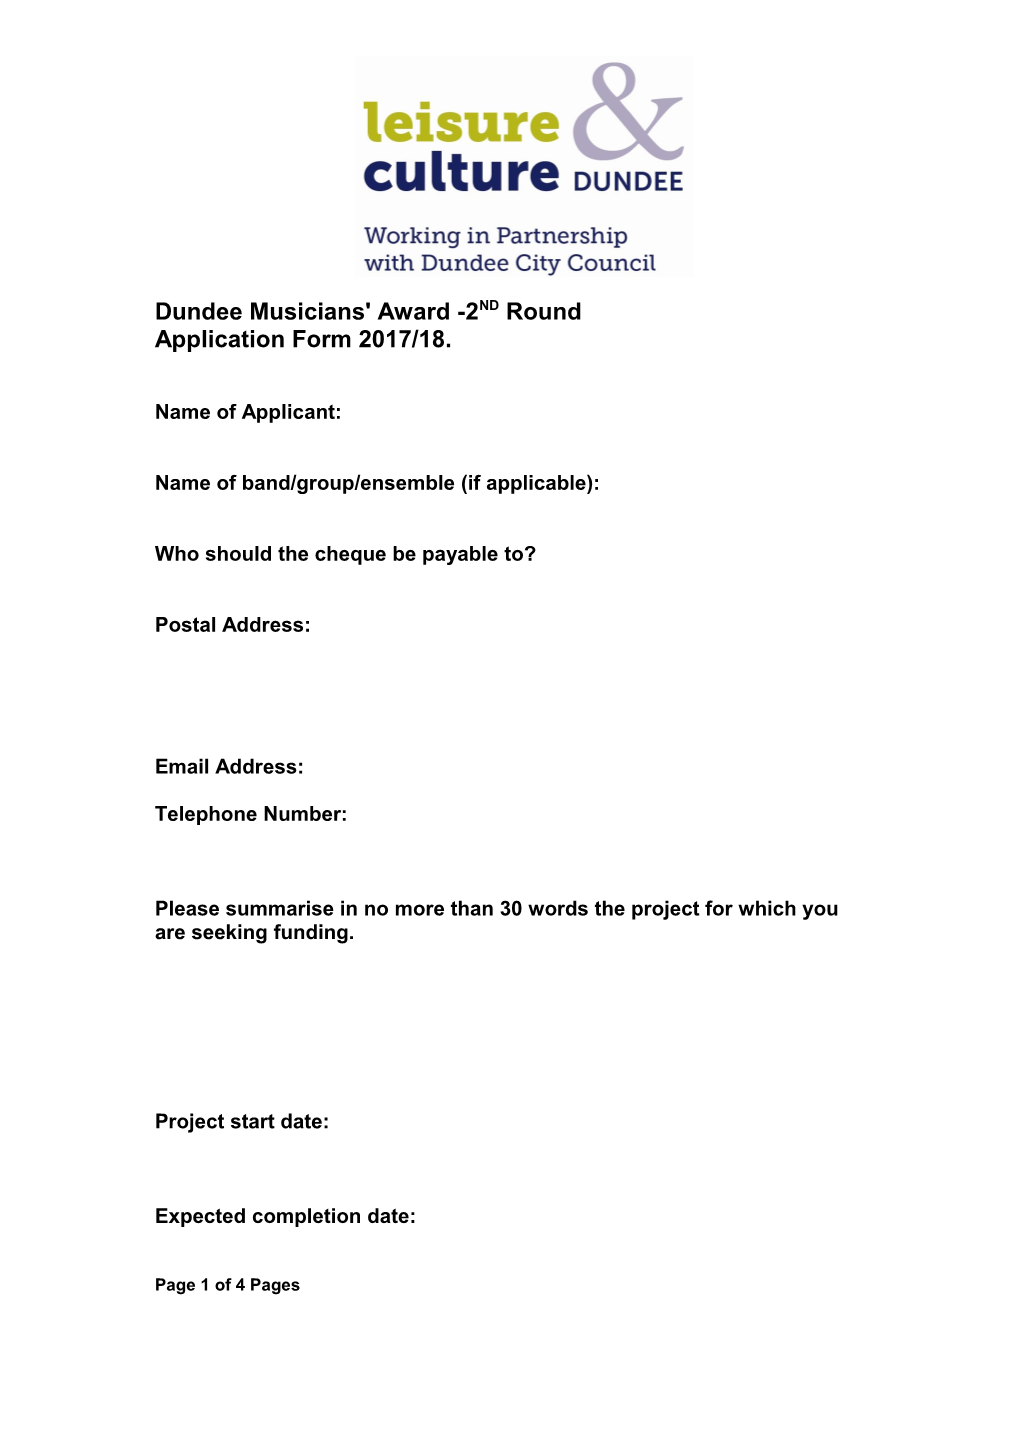 Dundee Musicians' Award Application Form 2010-11